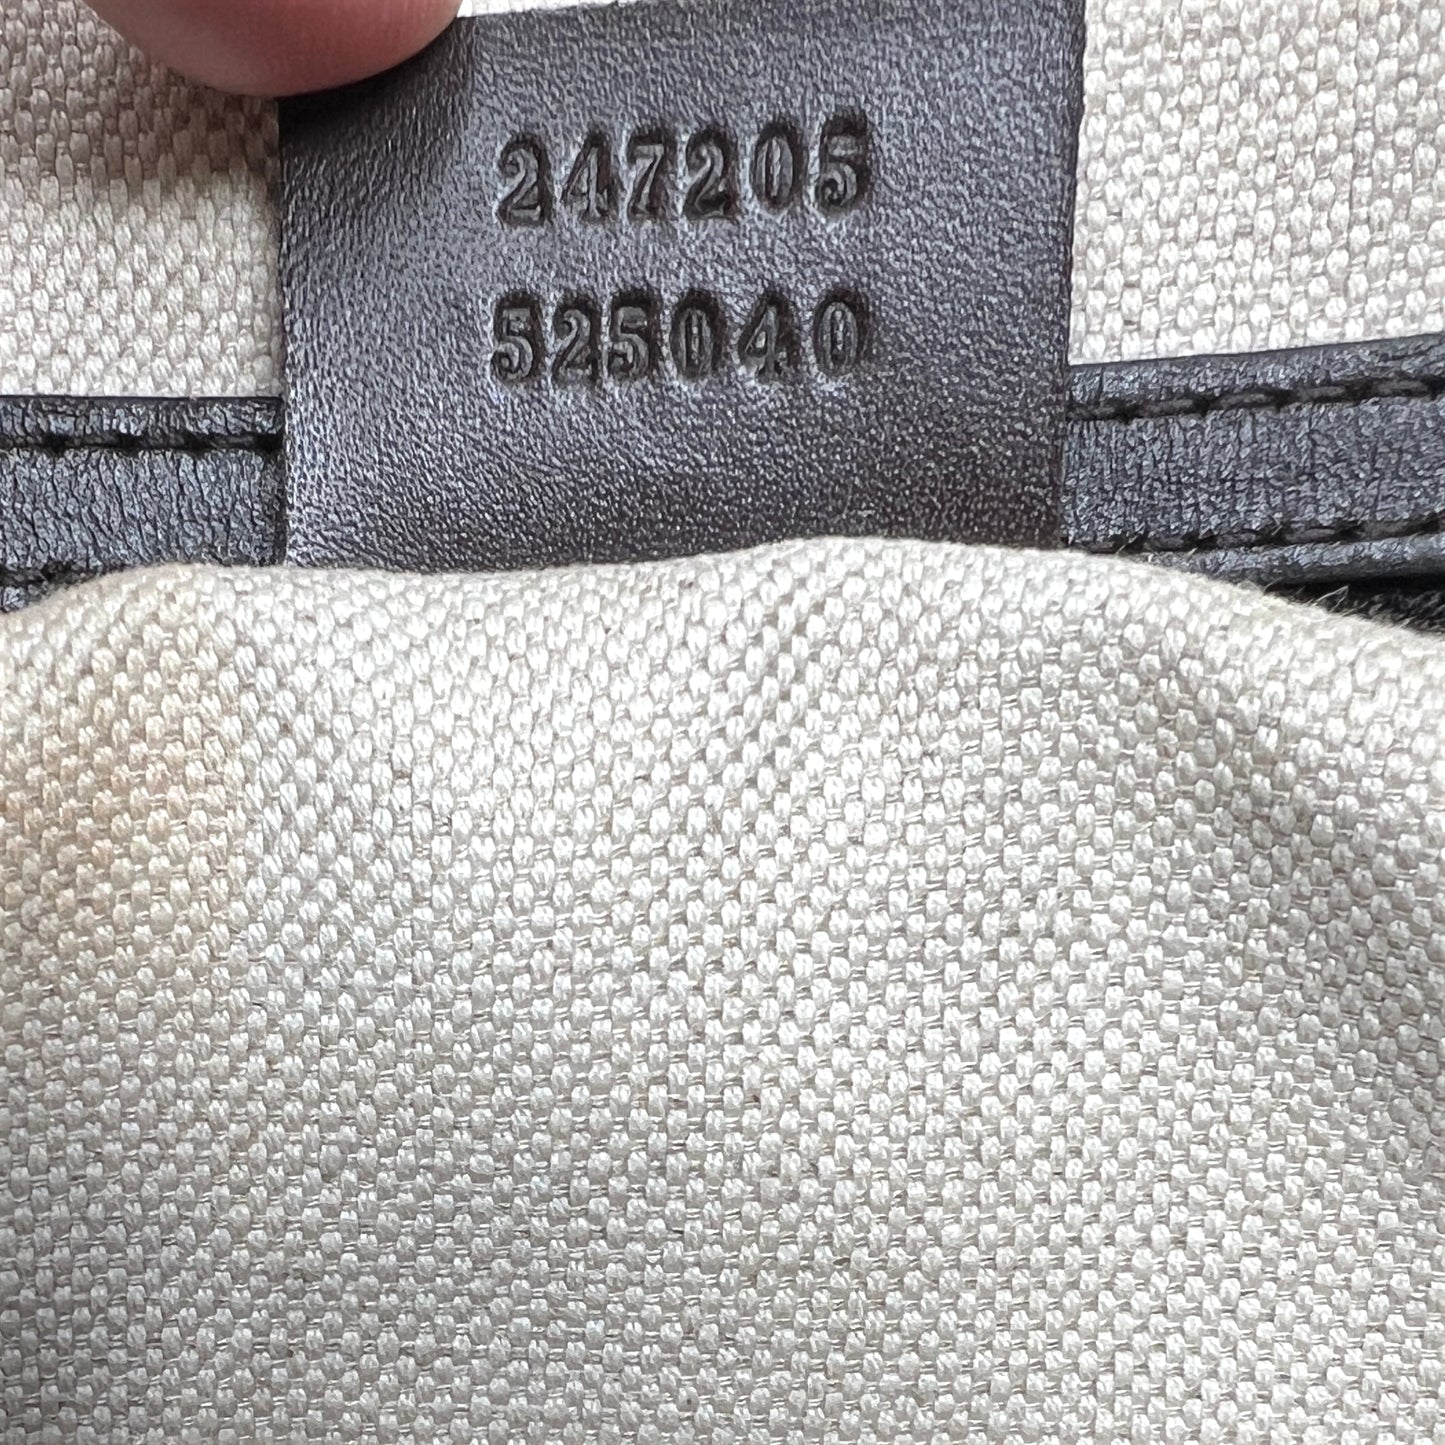 Gucci GG Supreme Monogram Leather Trim Vintage Web Boston Bag